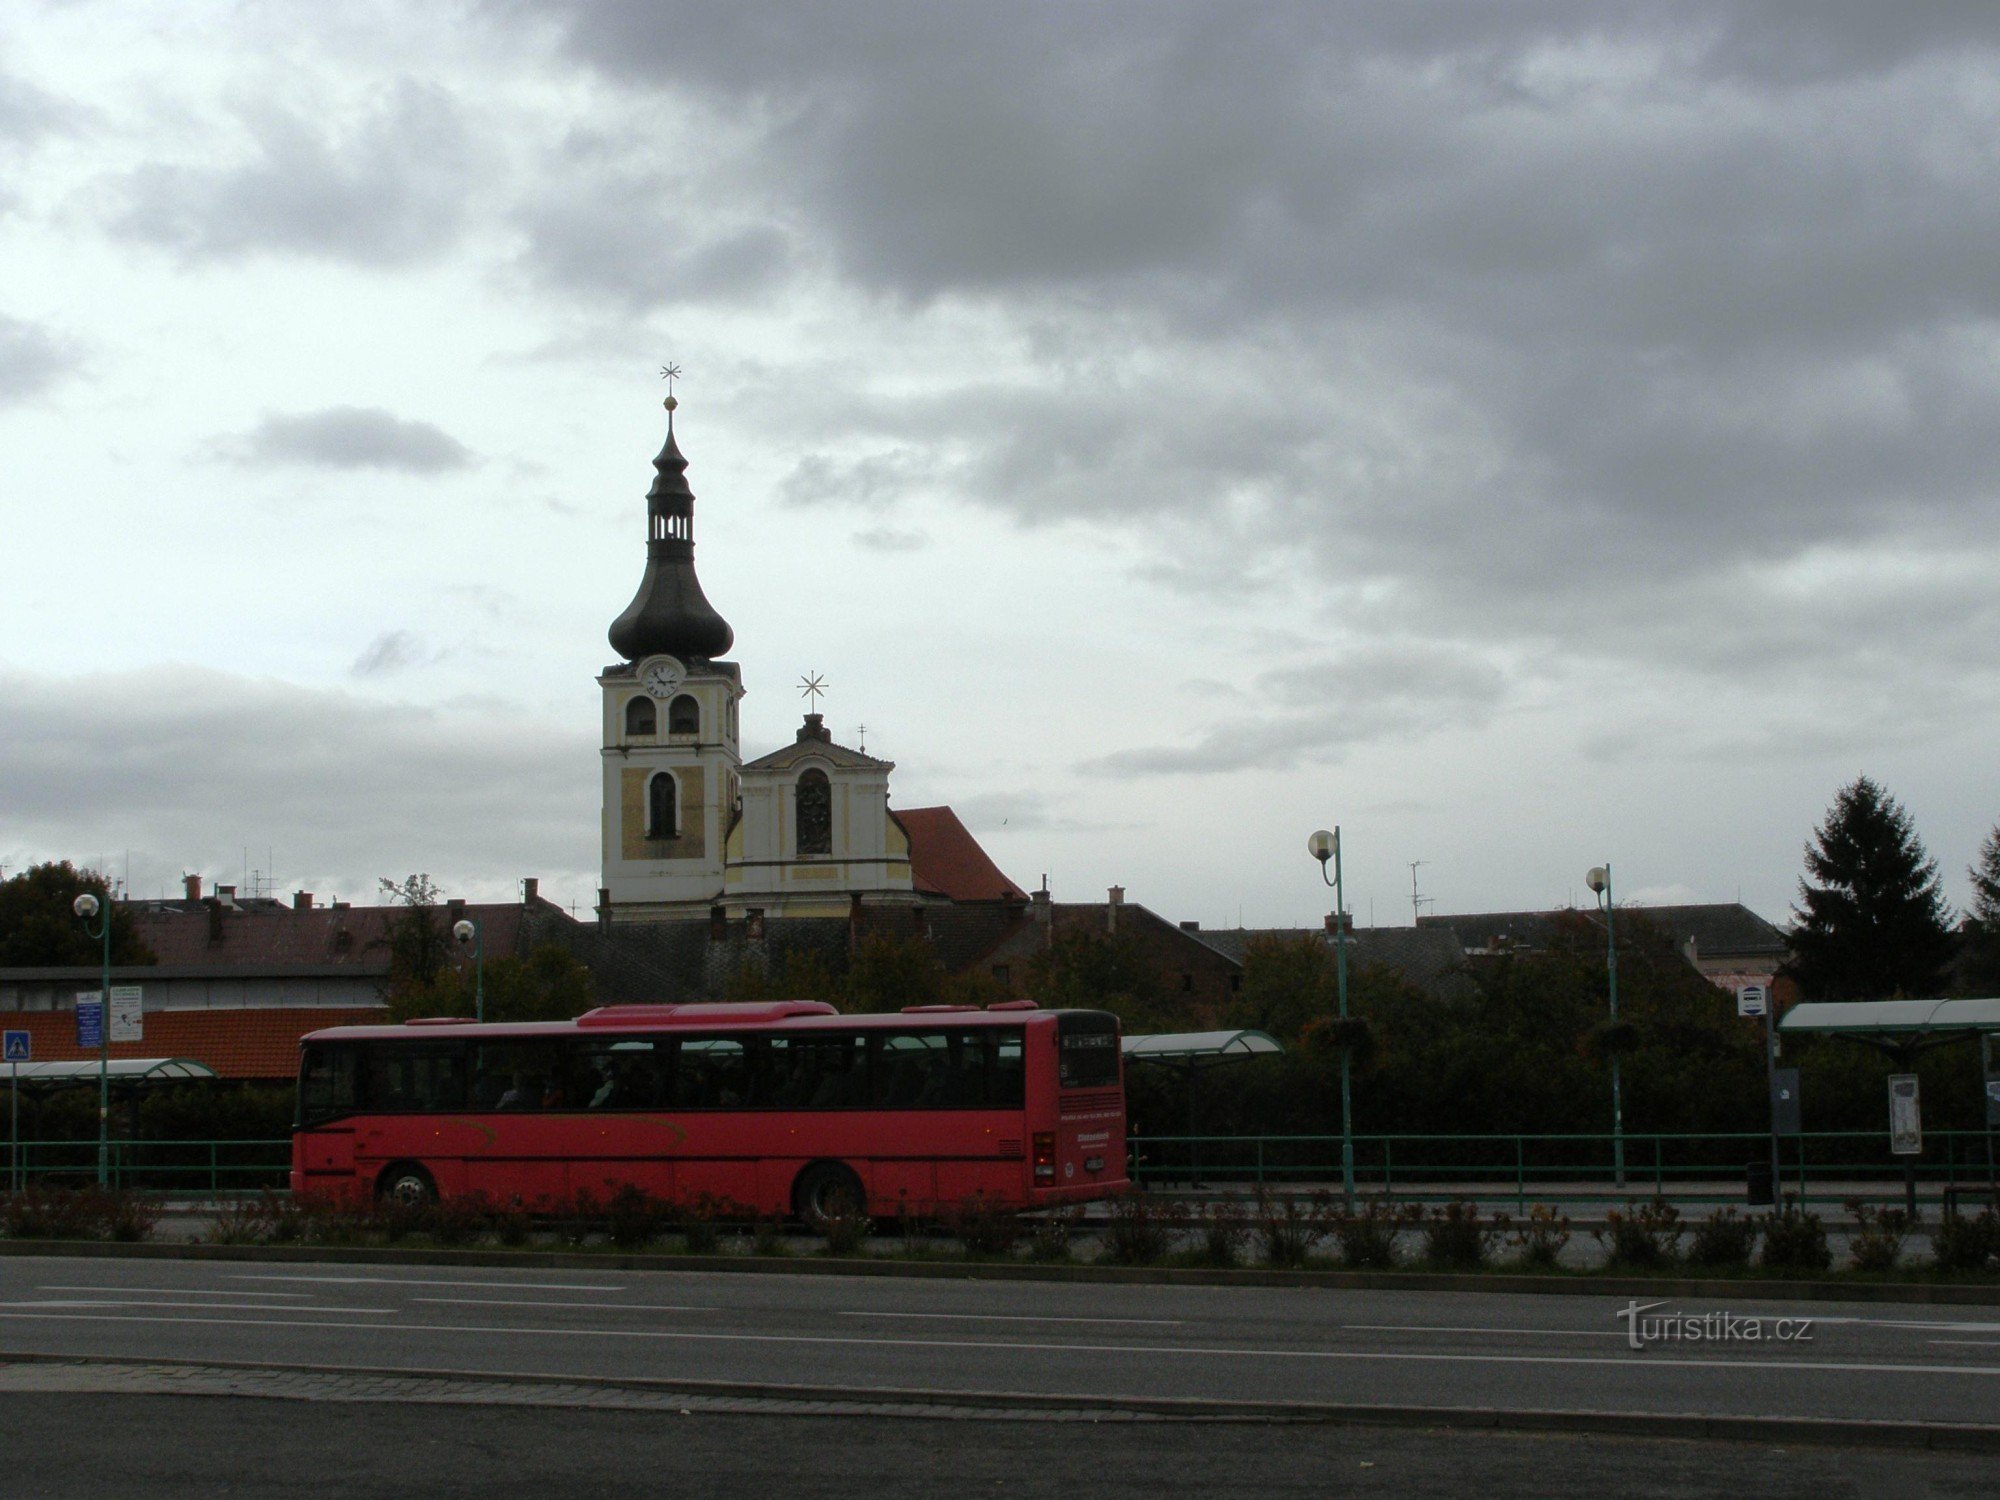 Hořice - bus station